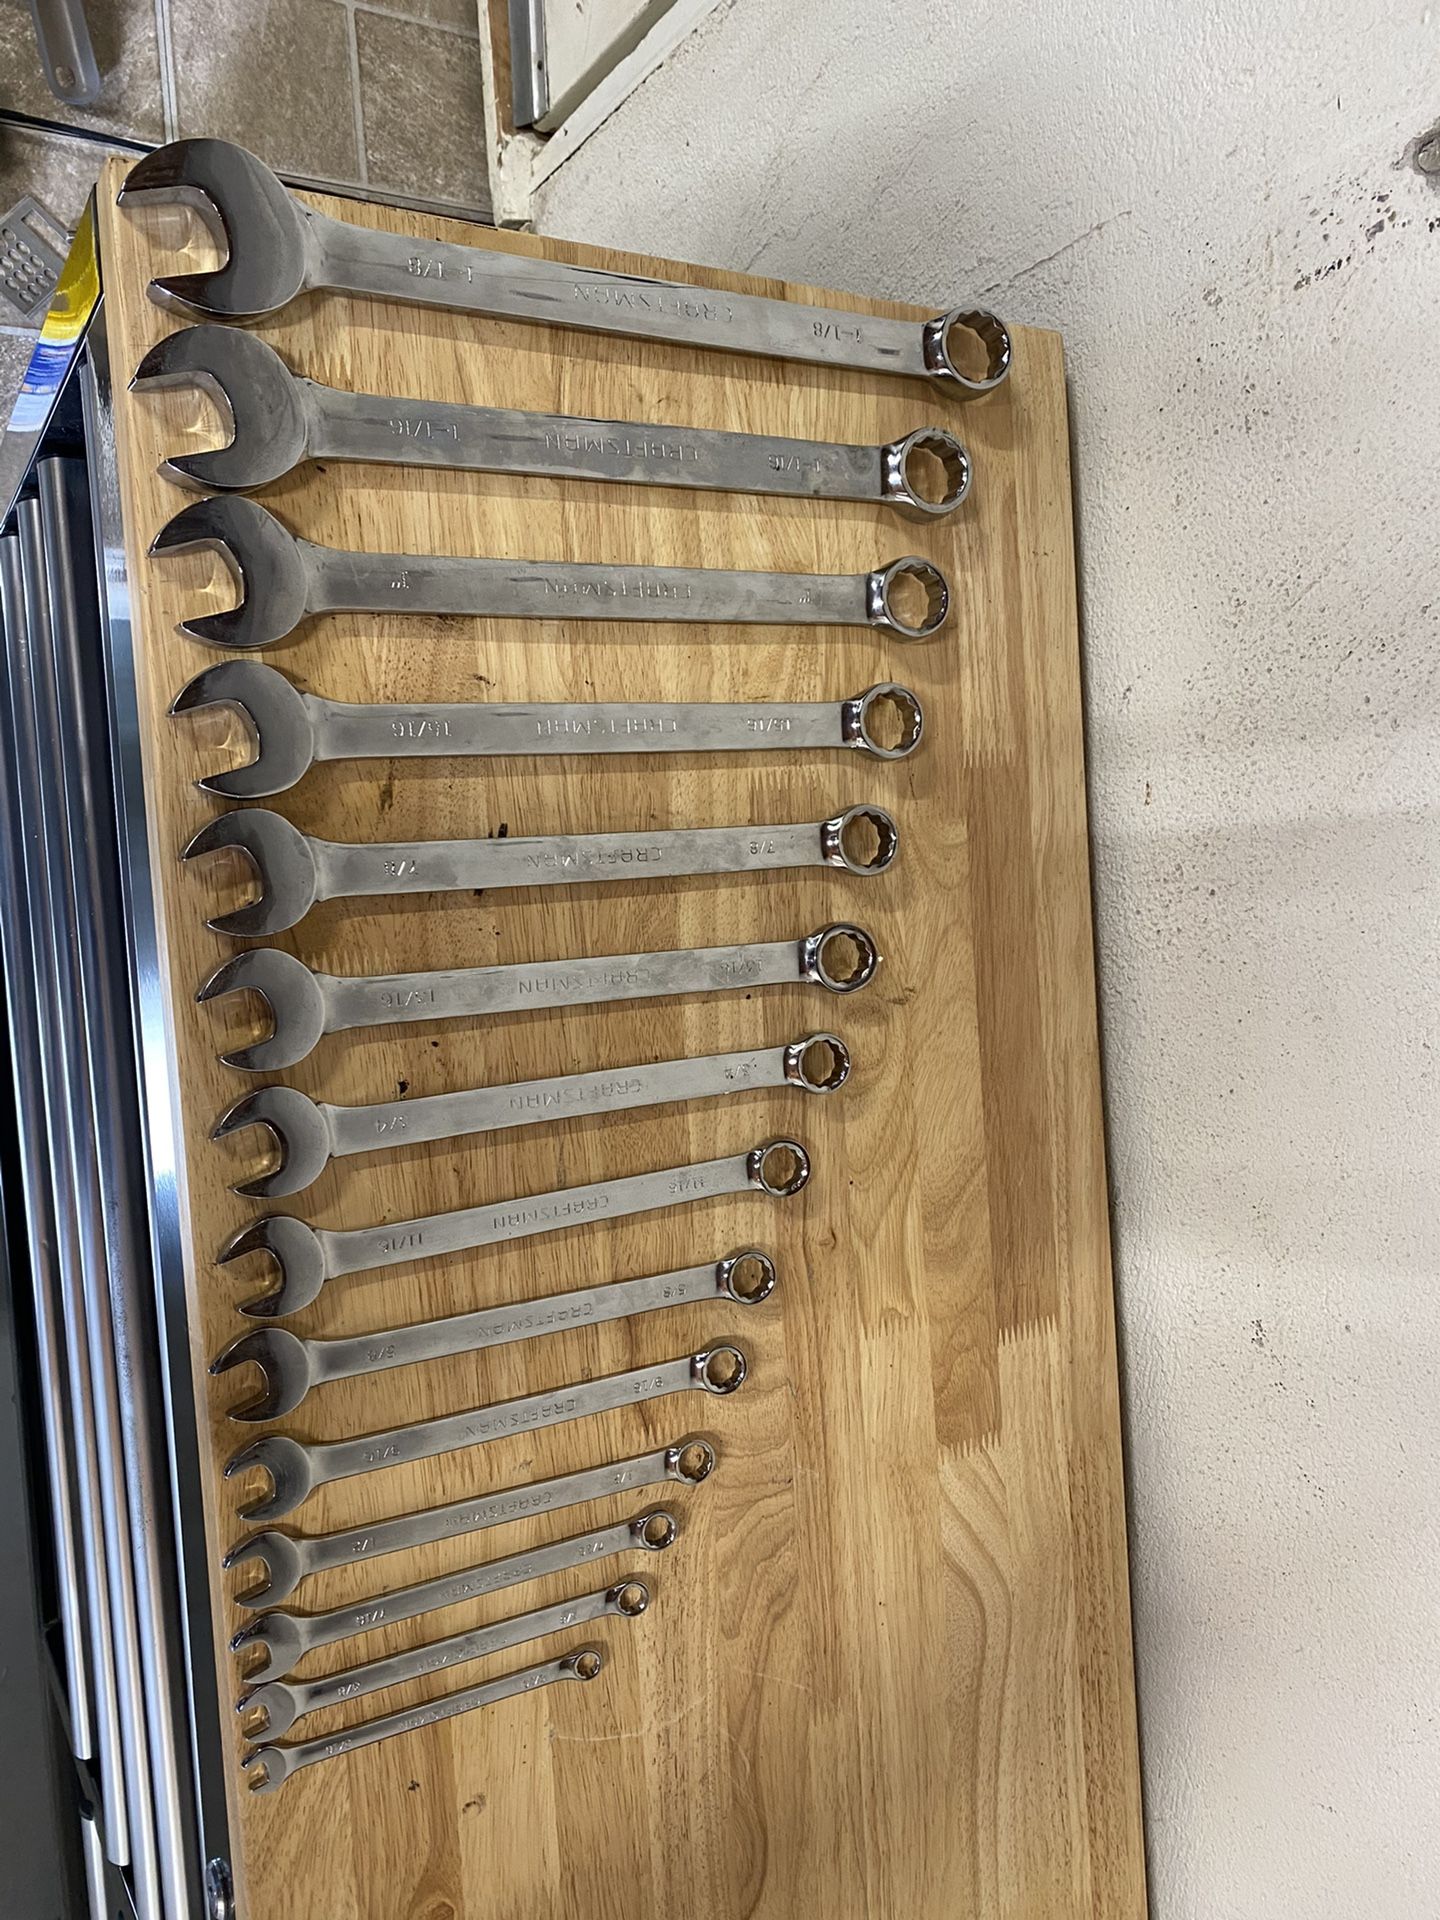 Craftsman professional Wrench Set